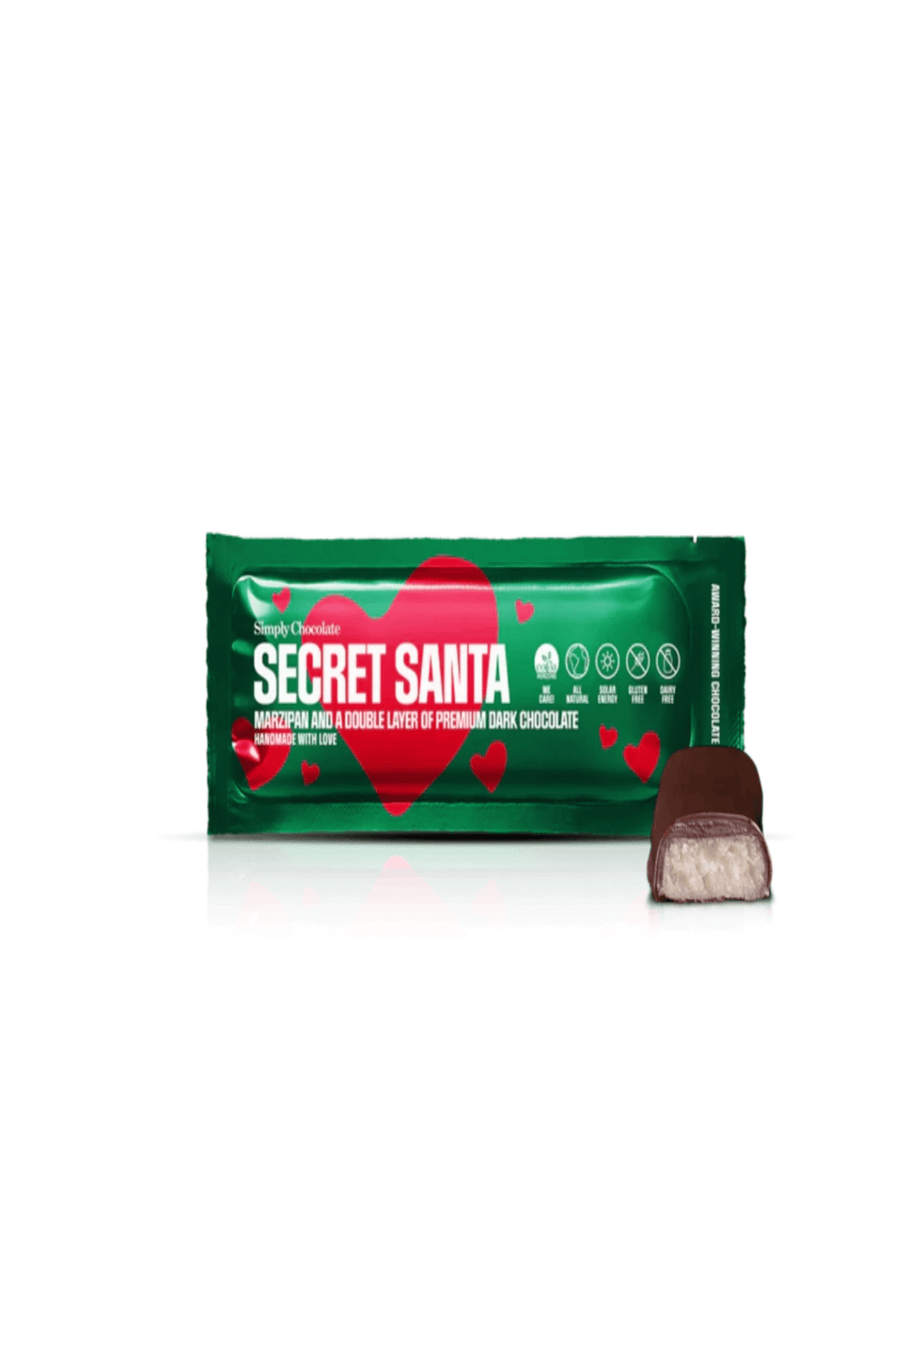 Simply Chocolate Secret Santa